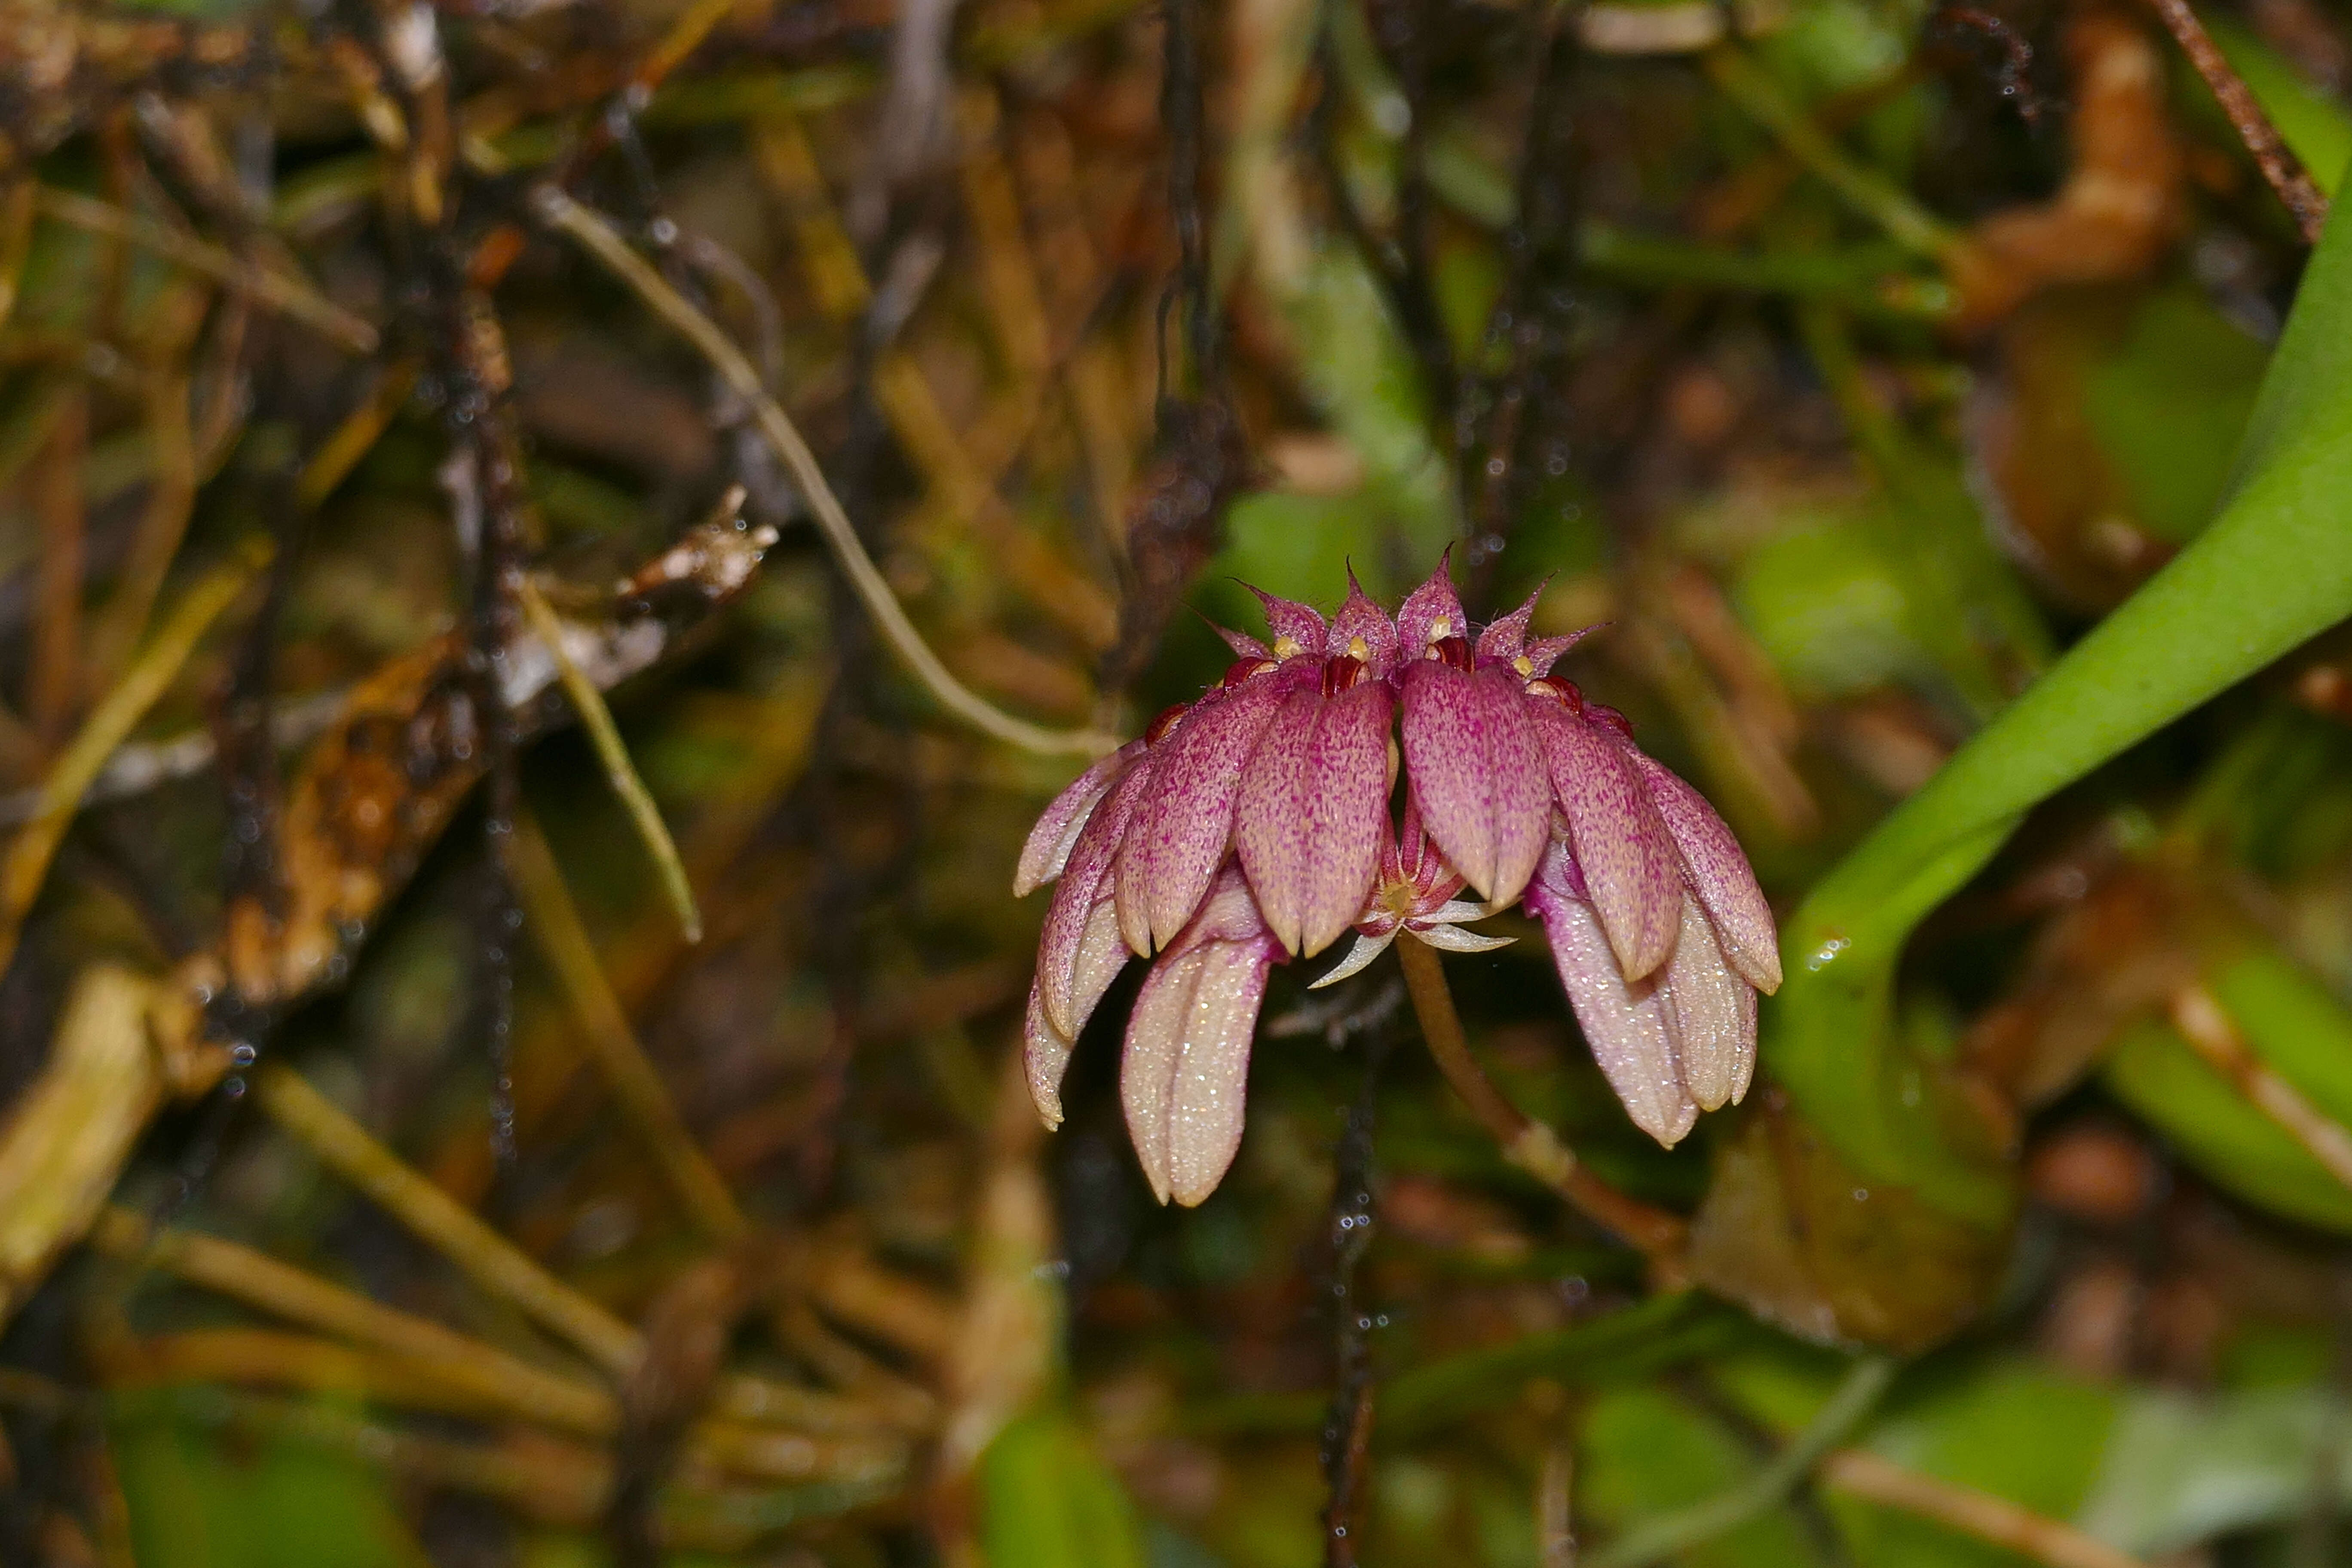 Image of Bulbophyllum trigonopus (Rchb. fil.)